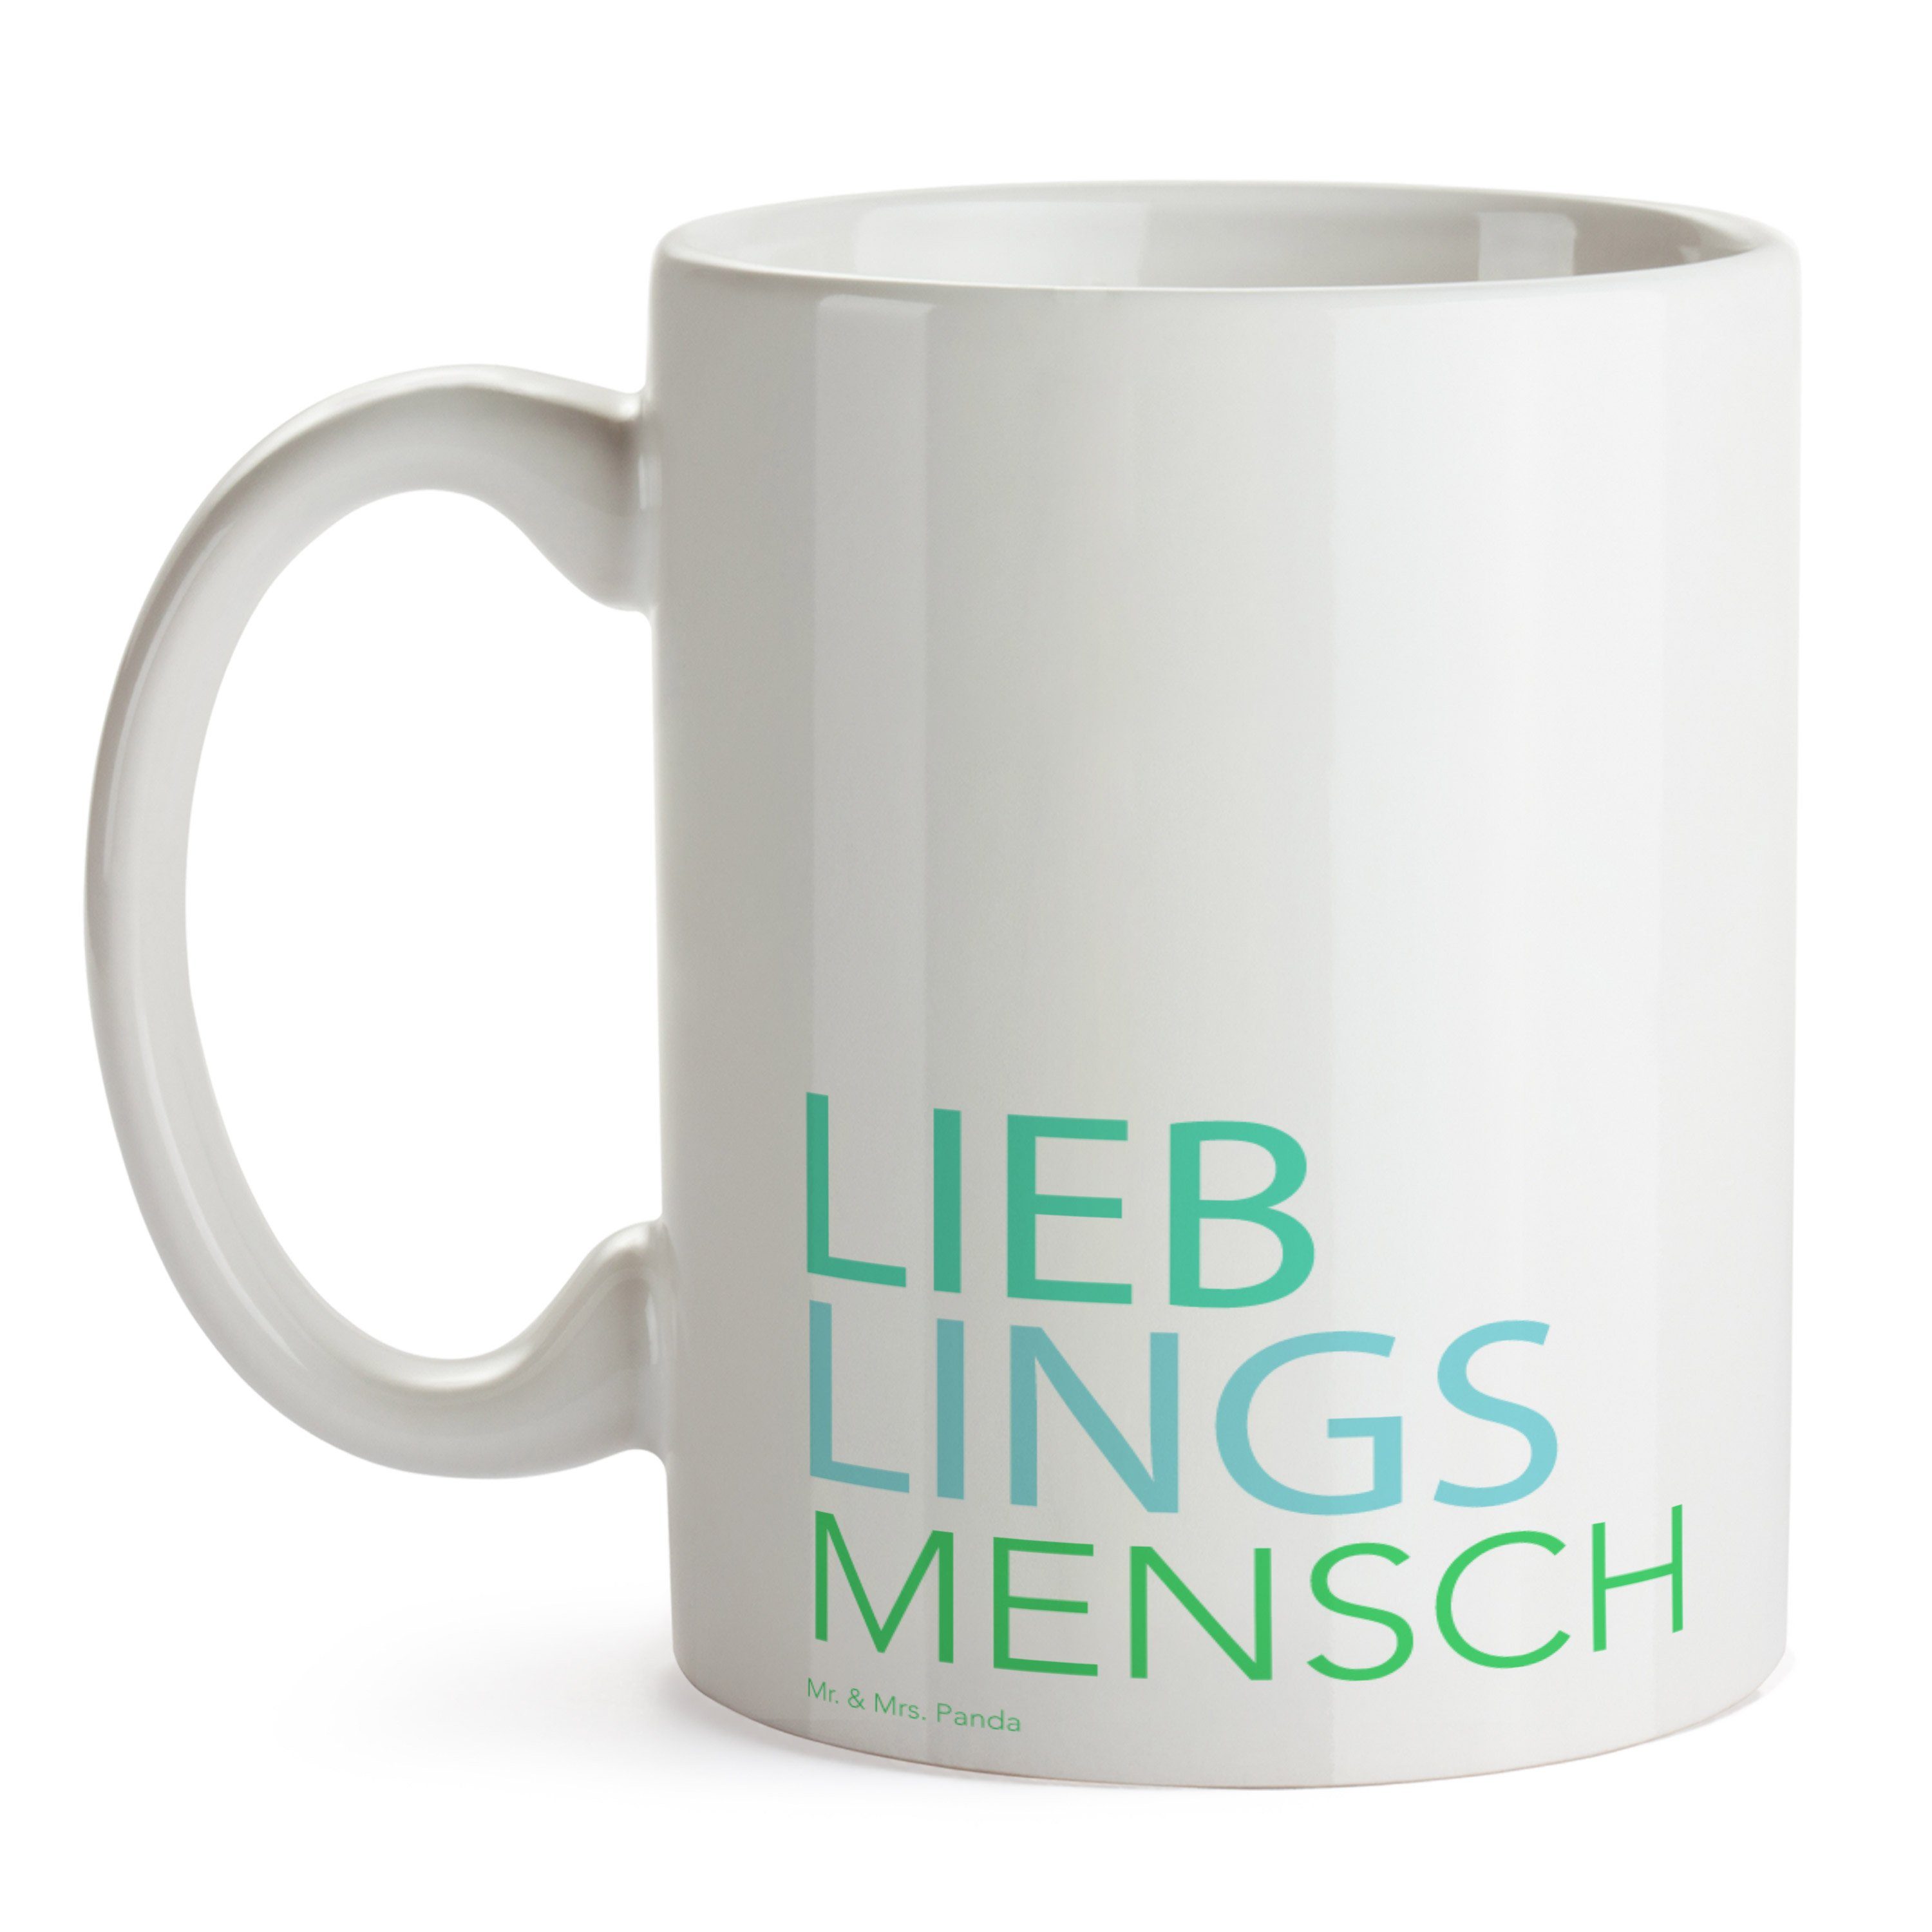 Weiß Spruch, - - Teetasse, Tasse Mrs. & Mensch, Lieblings Mr. Panda Liebe, Mensch Geschenk, Keramik